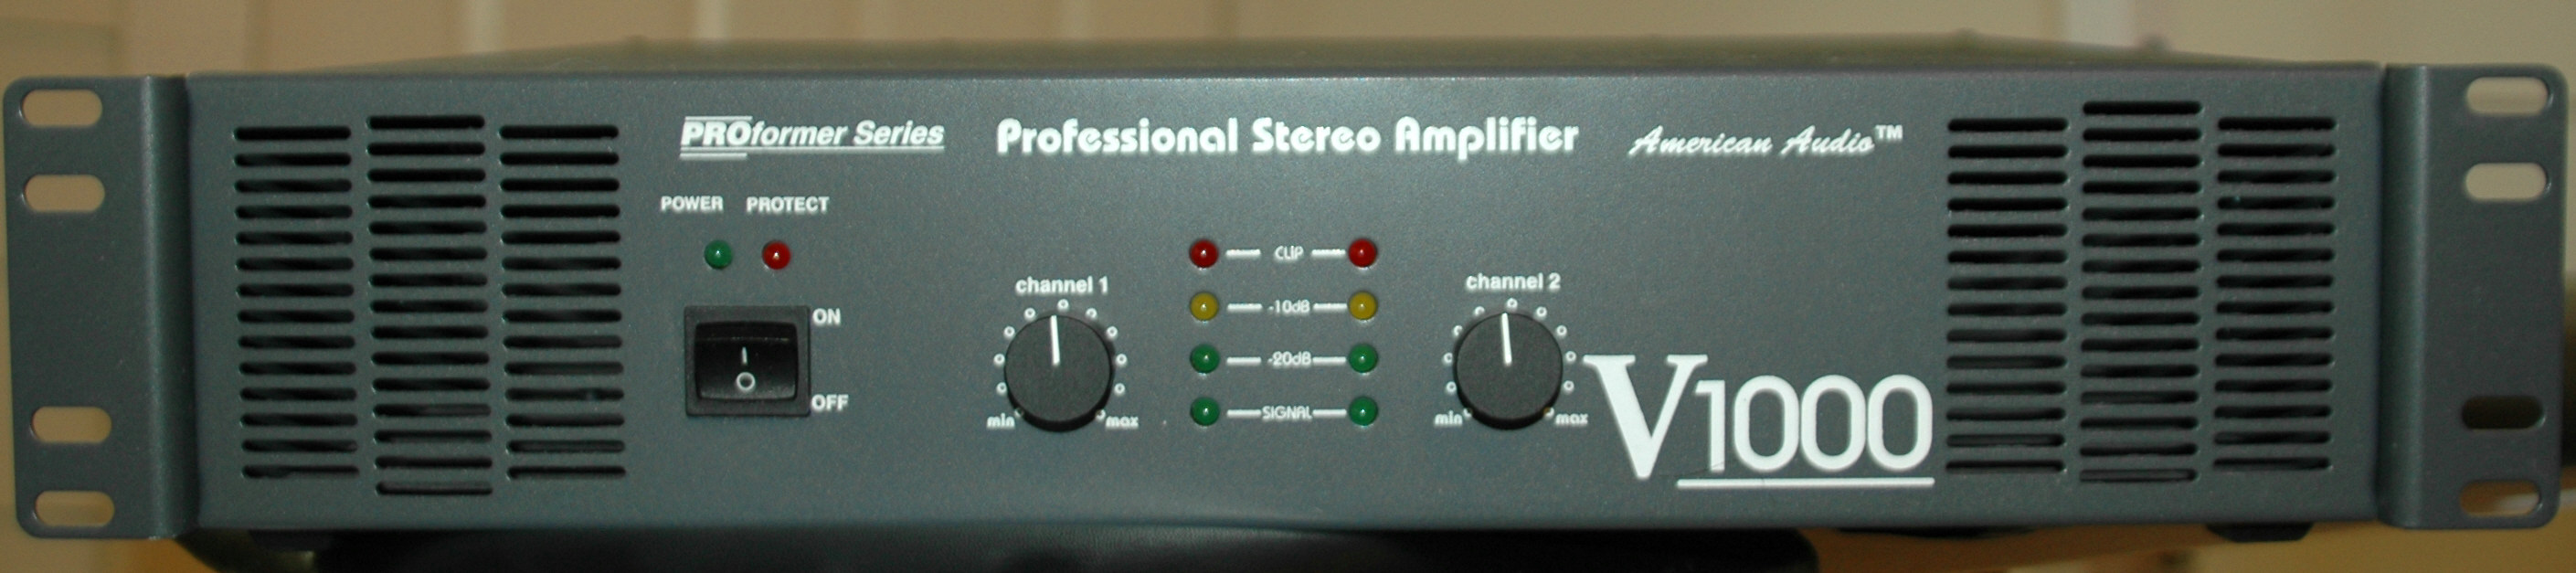 American DJ PROformer Pro Stereo Amplifier for Sale Cheap